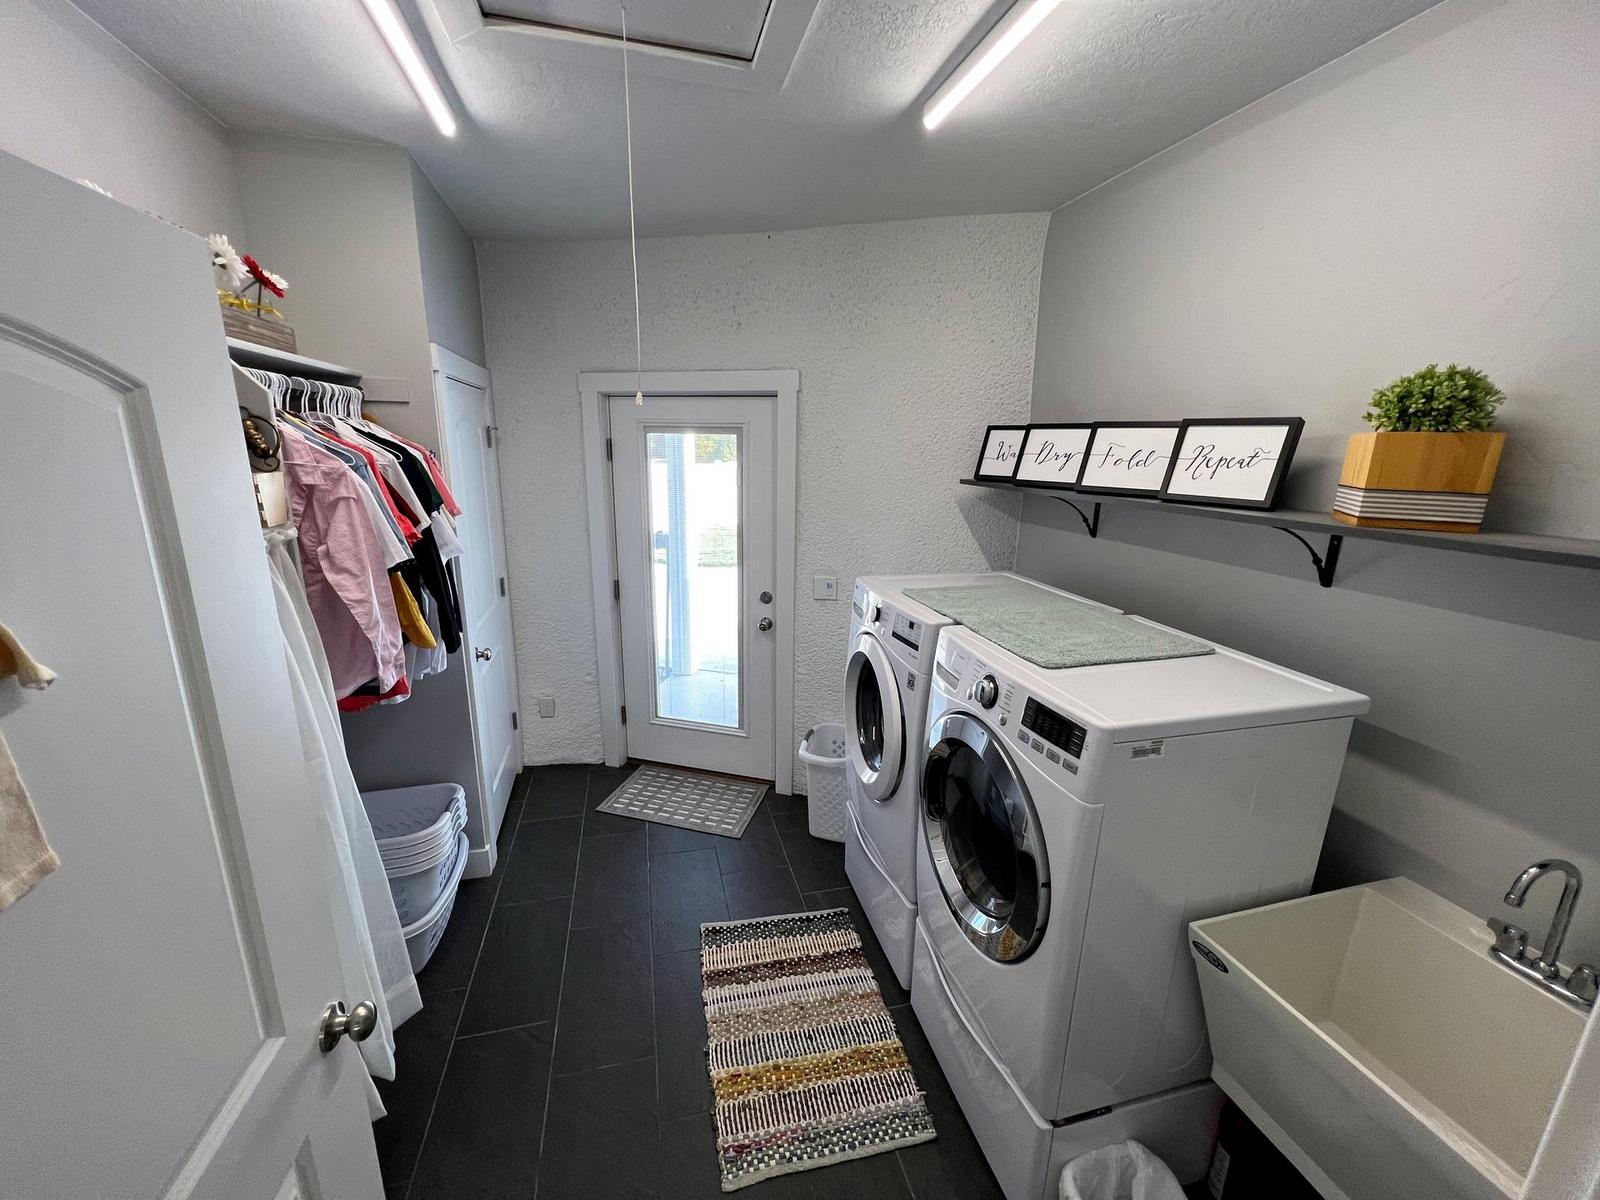 Laundry room design details.